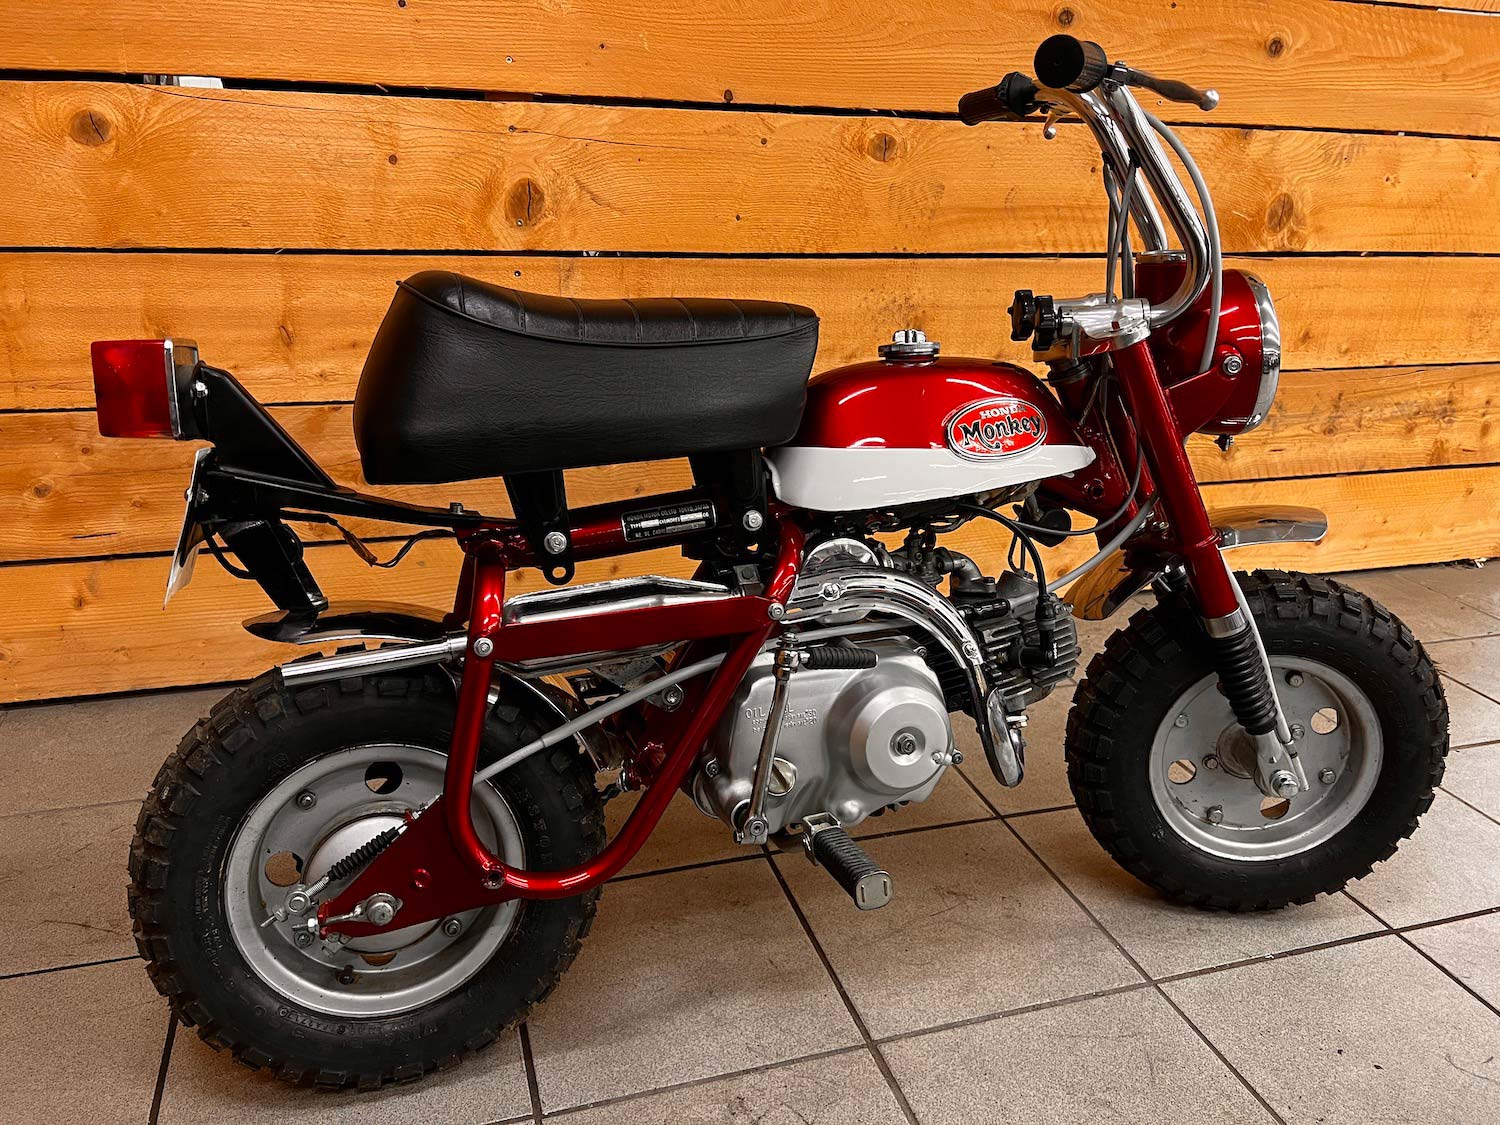 Honda_Monkey_Z50_Cezanne_classic_motorcycle_7-163.jpg